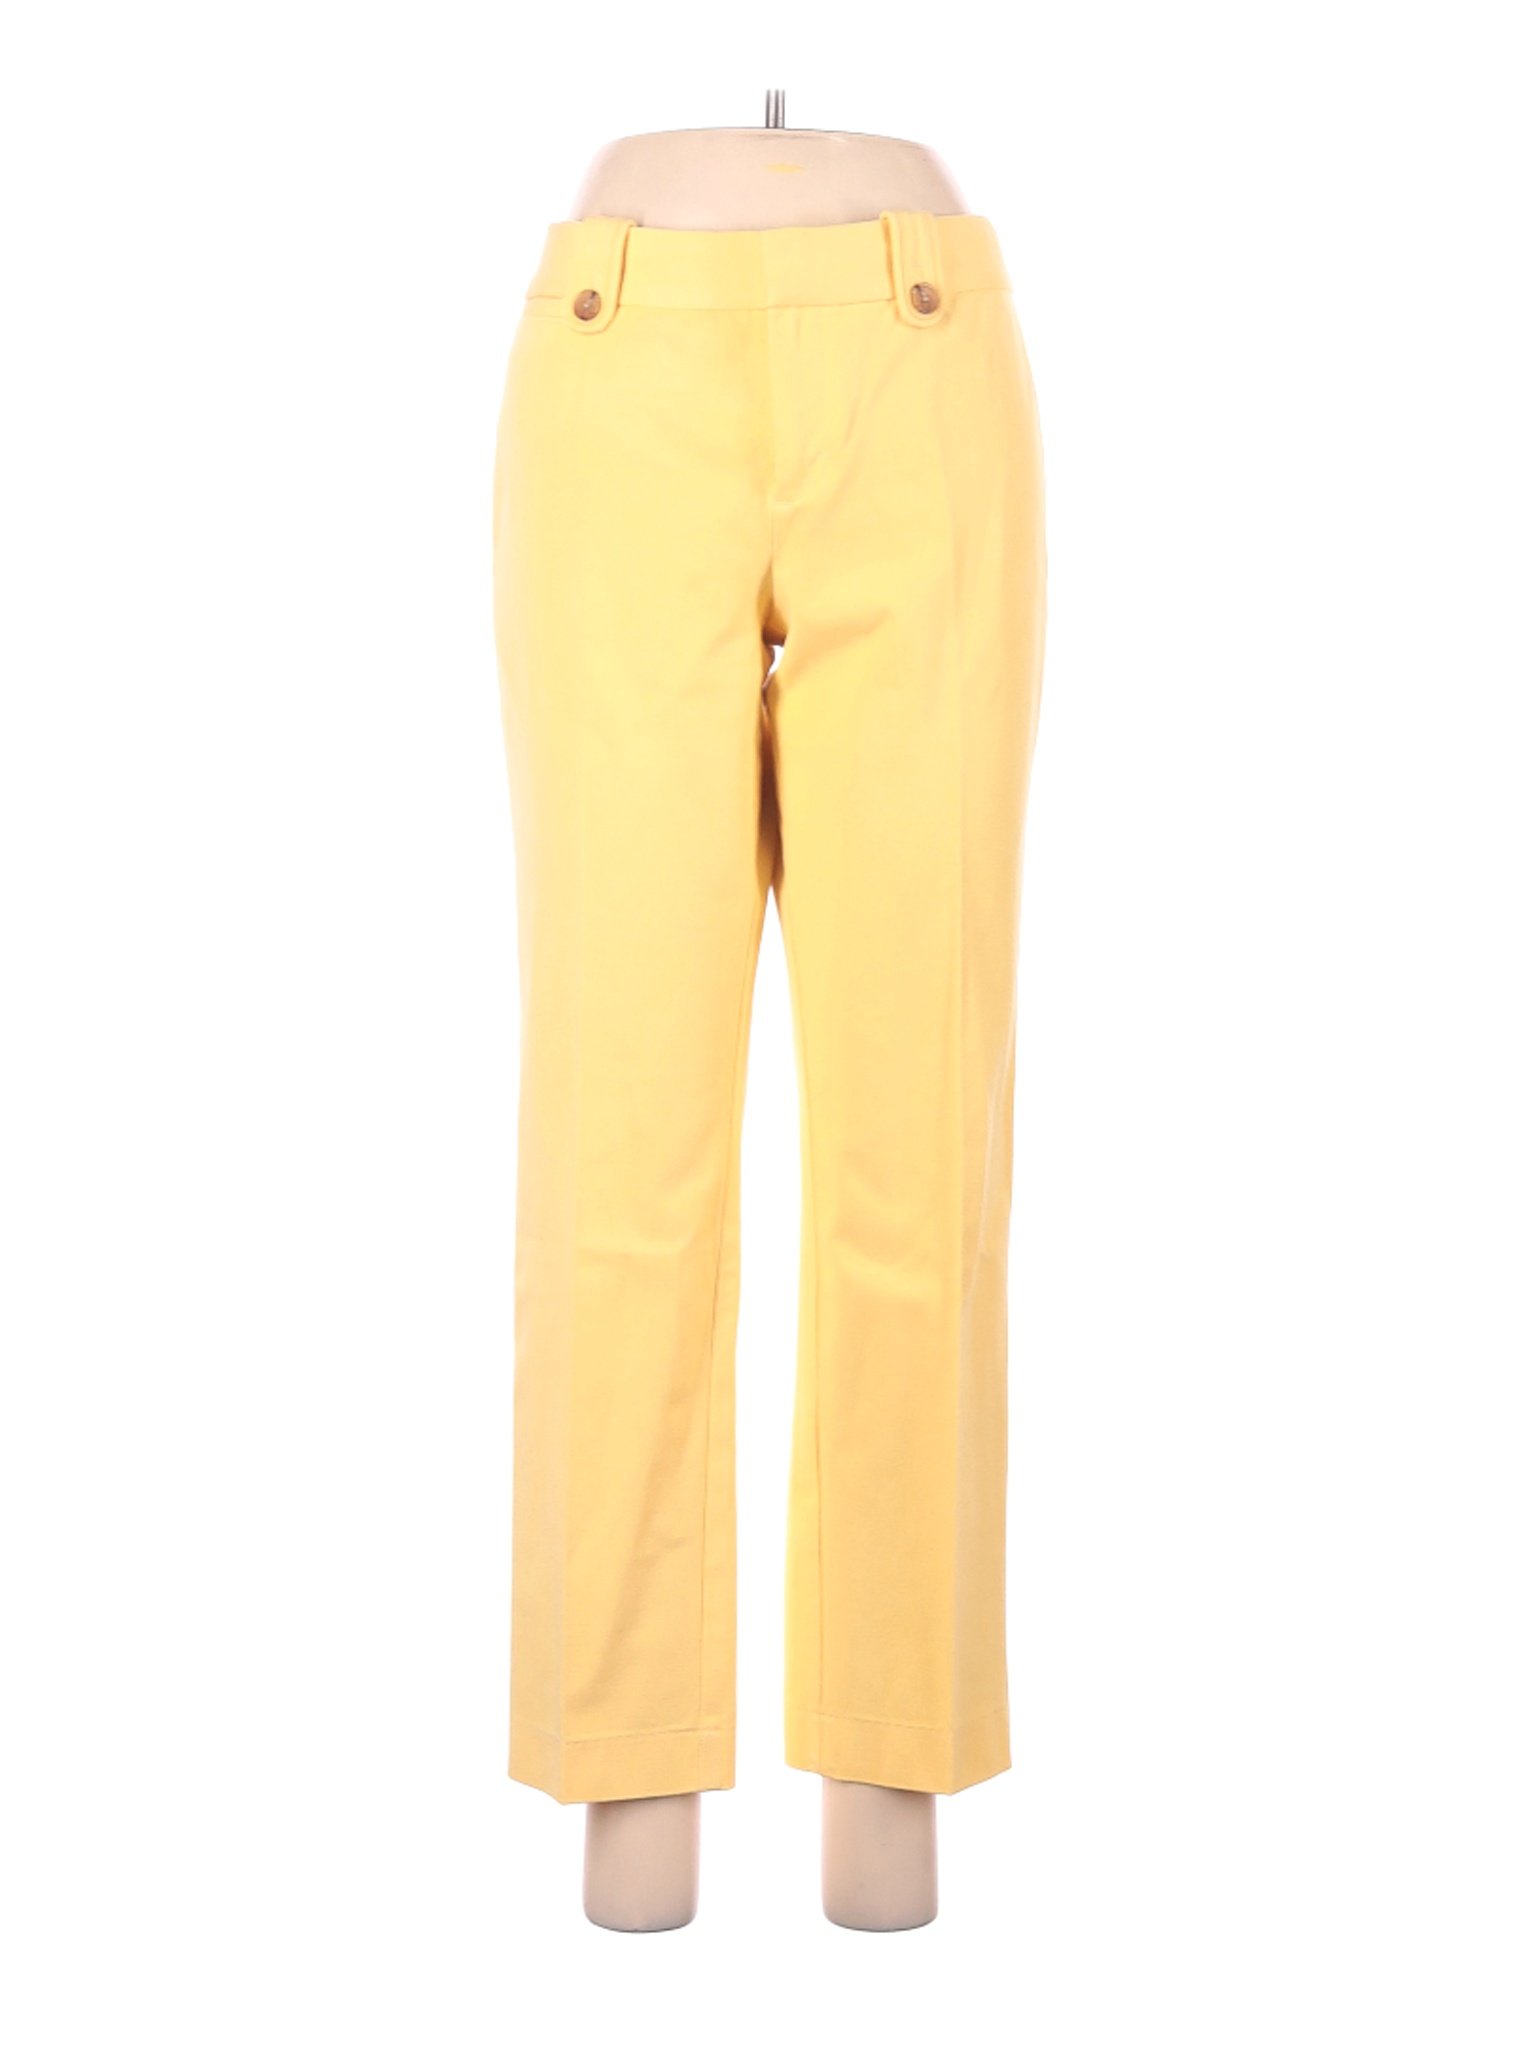 Banana Republic Women Yellow Dress Pants 8 | eBay